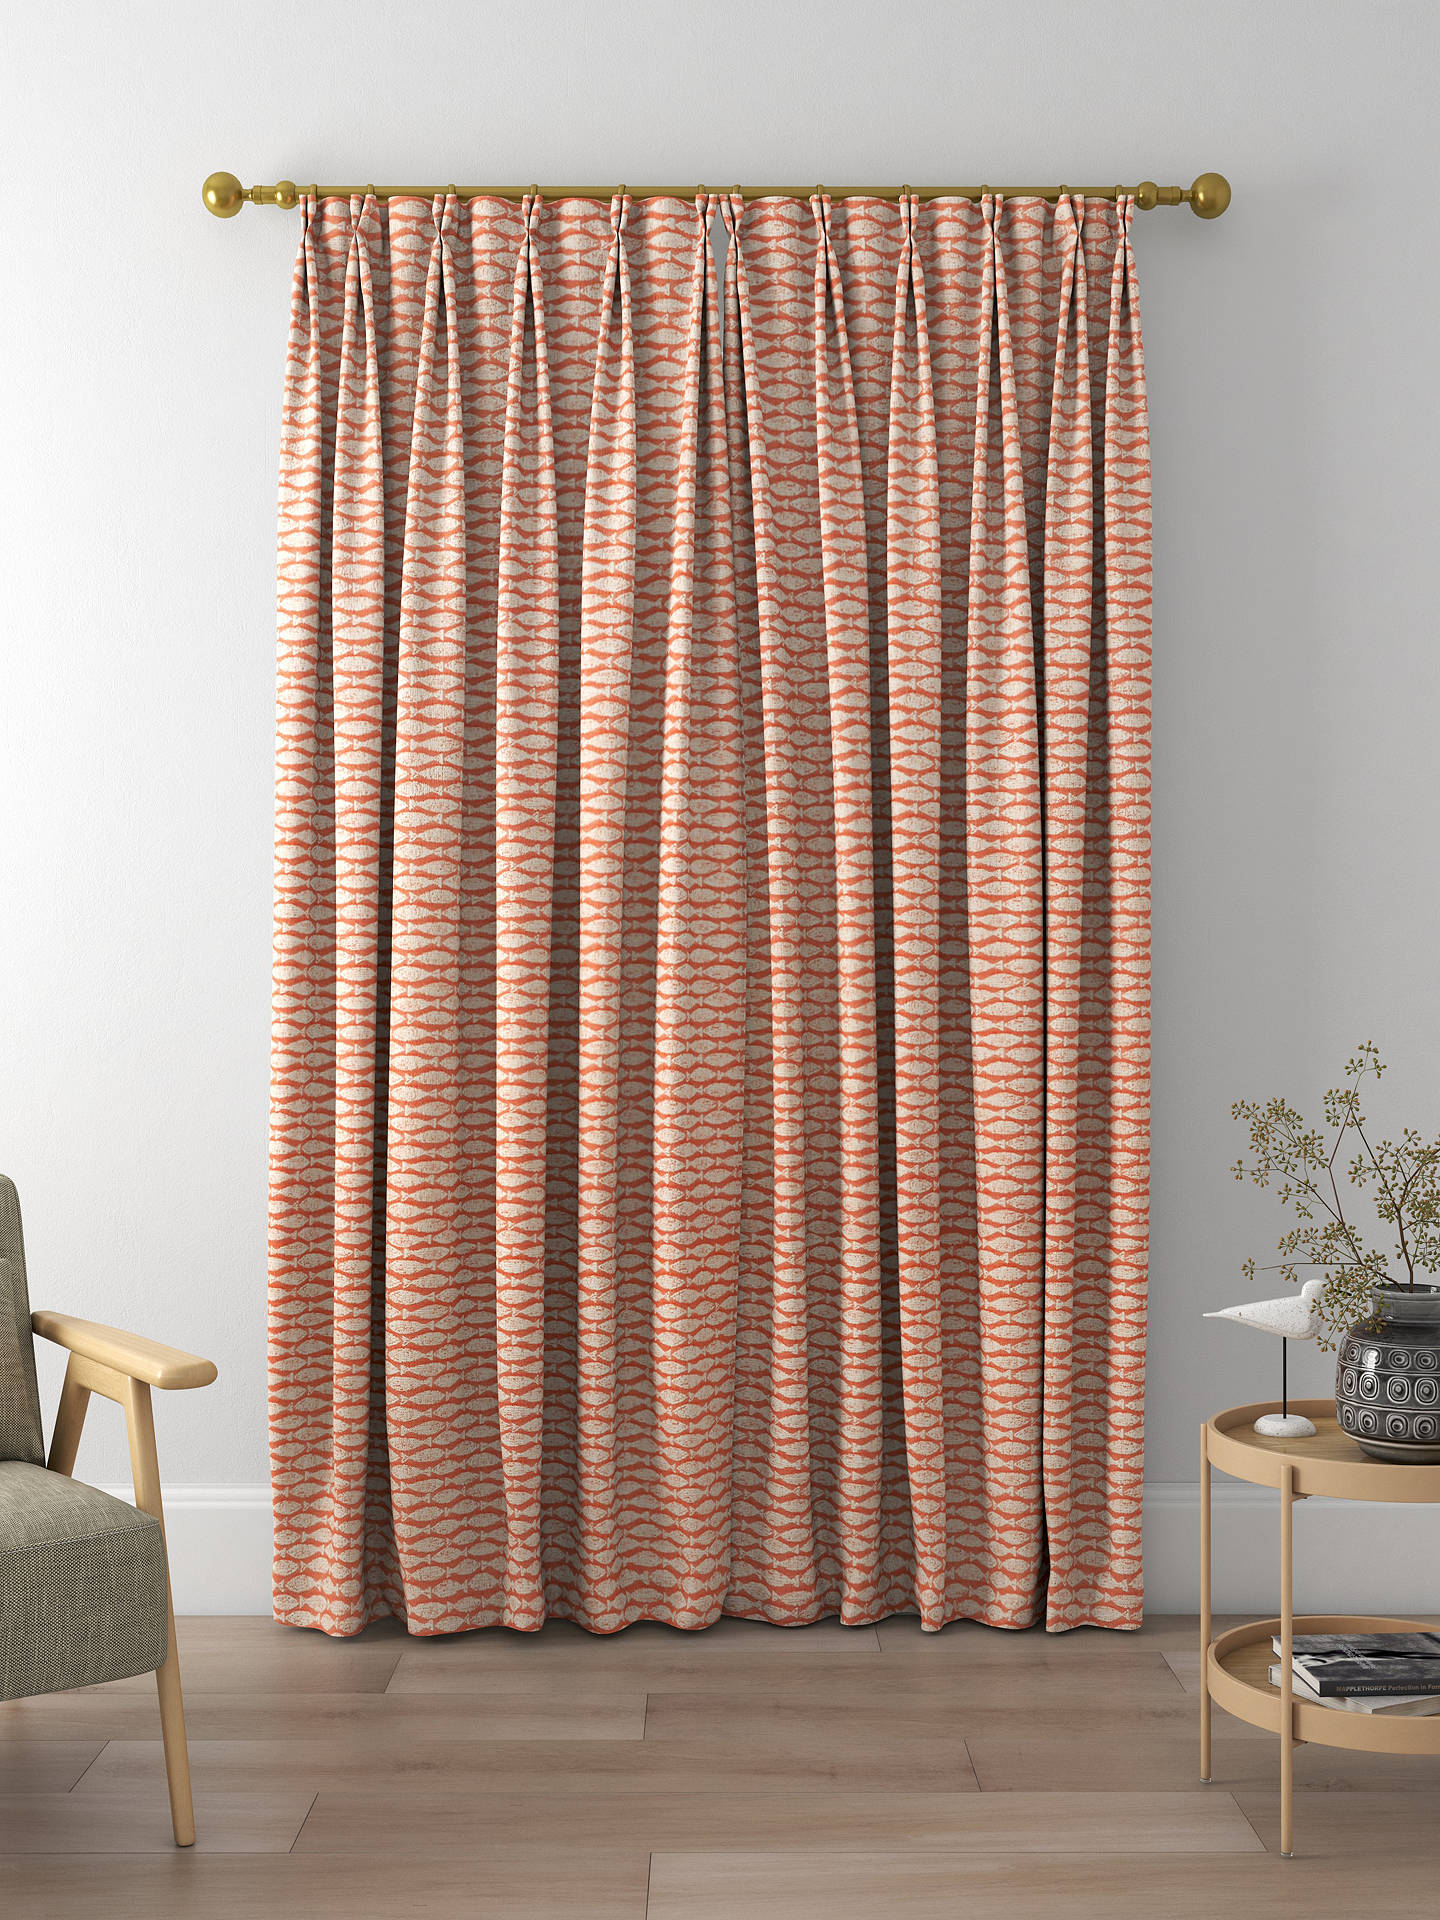 Scion Samaki Made to Measure Curtains, Paprika